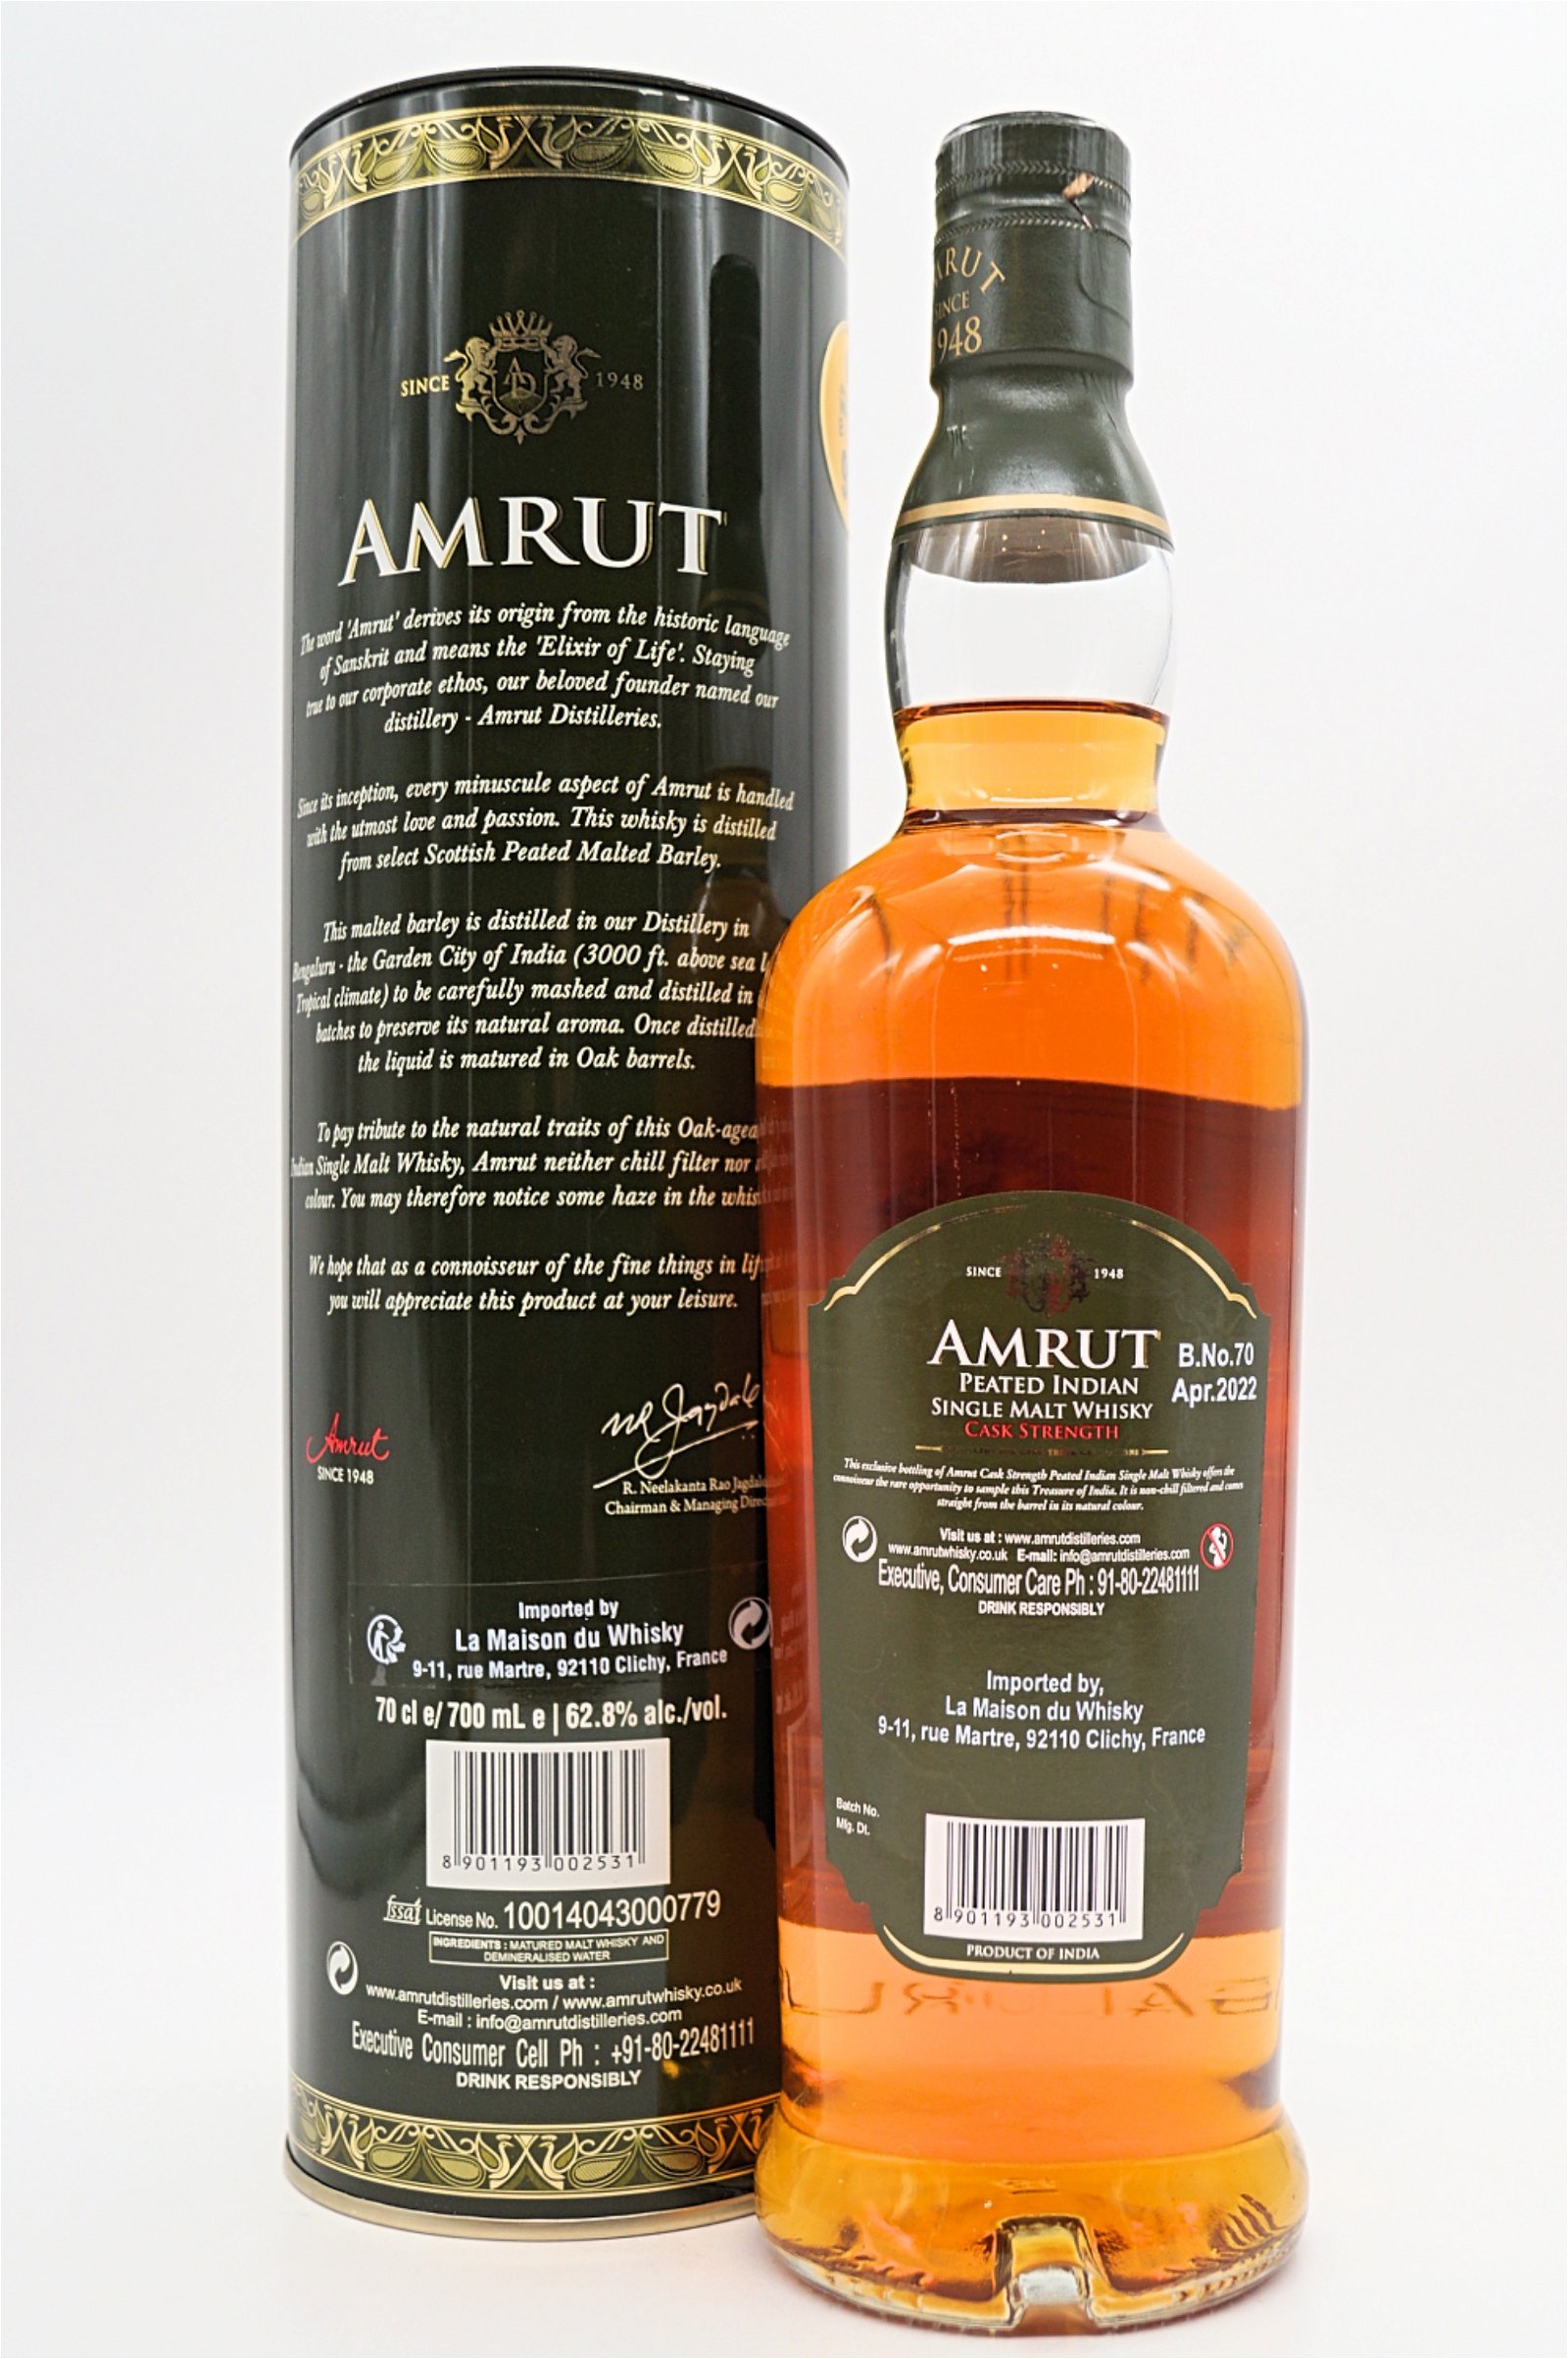 Amrut Cask Strenght Peated Indian Single Malt Whisky